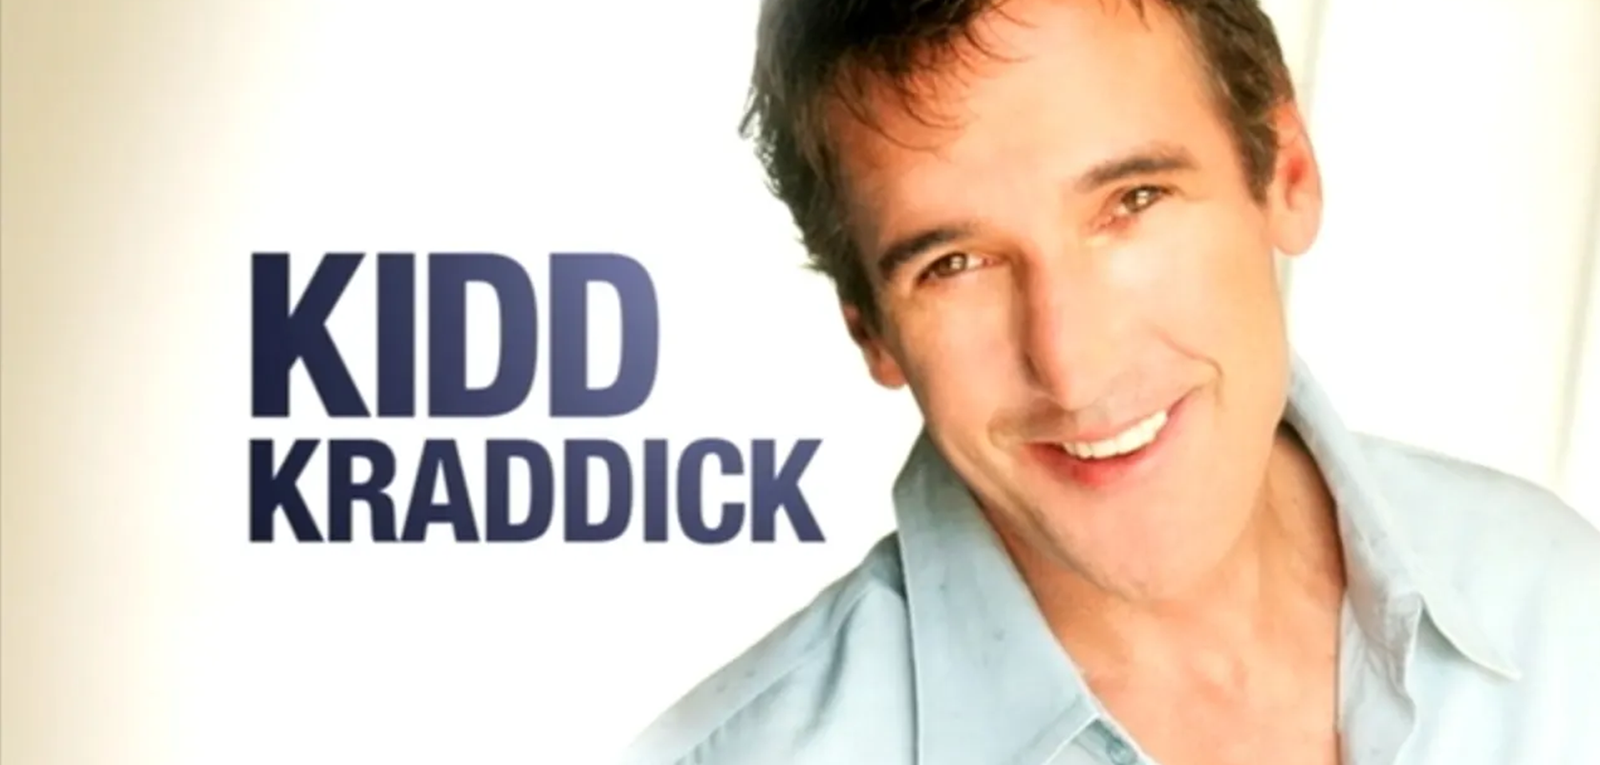 Kidd Kraddick